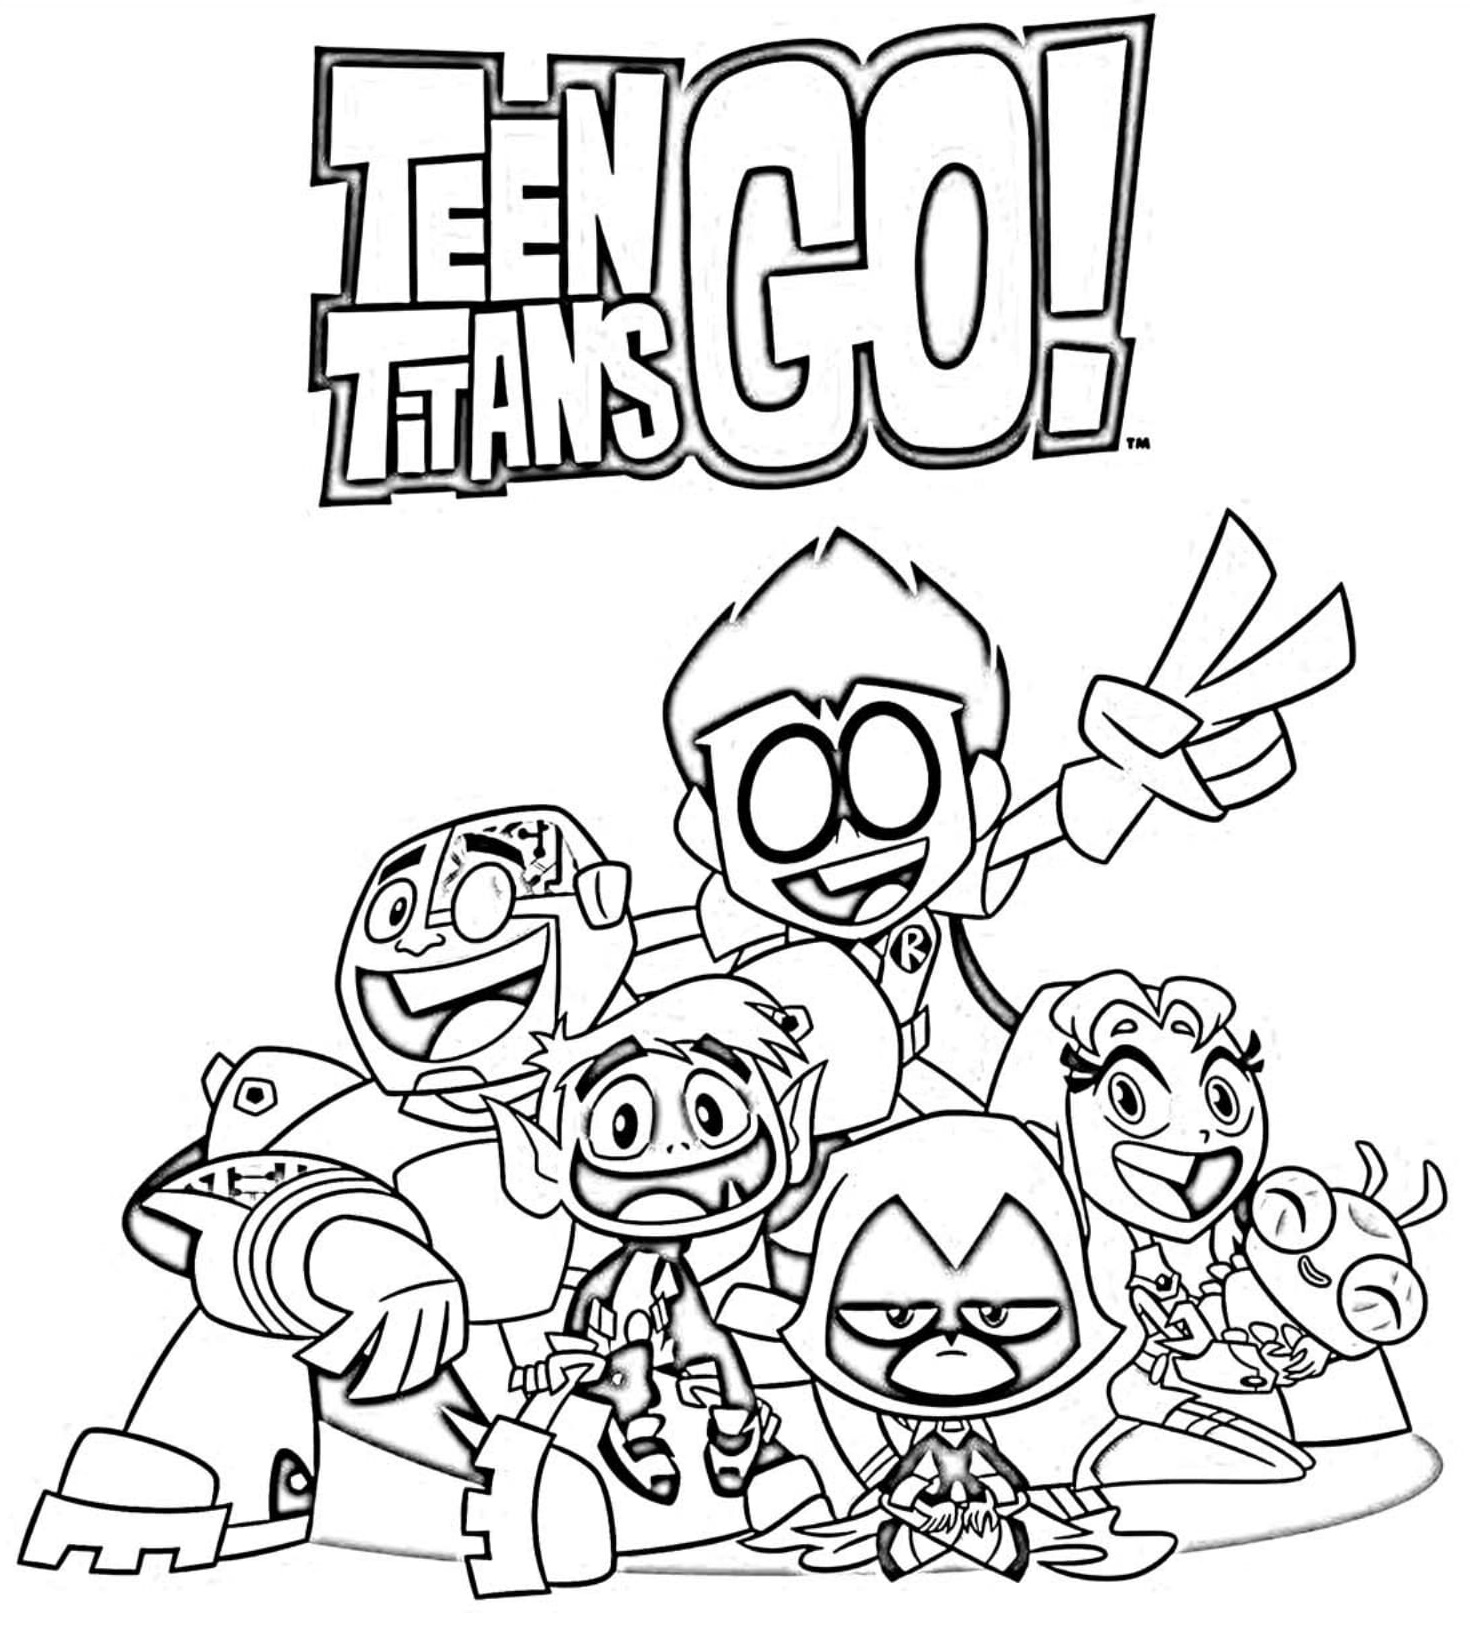 Team titans go coloring pages